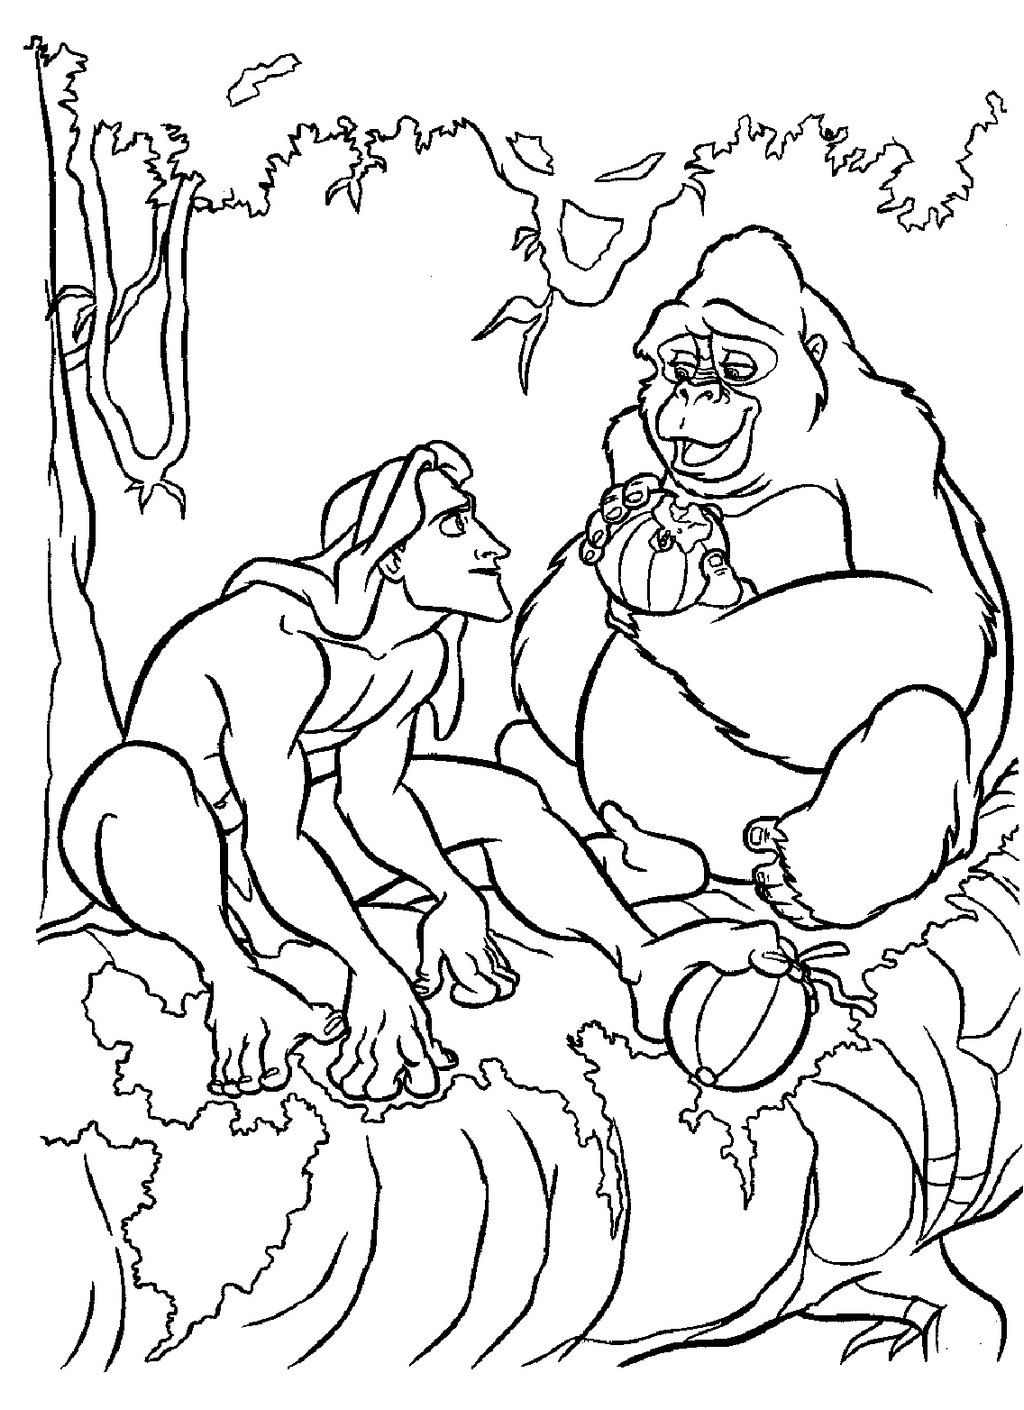 Tarzan talking to animals coloring sheet